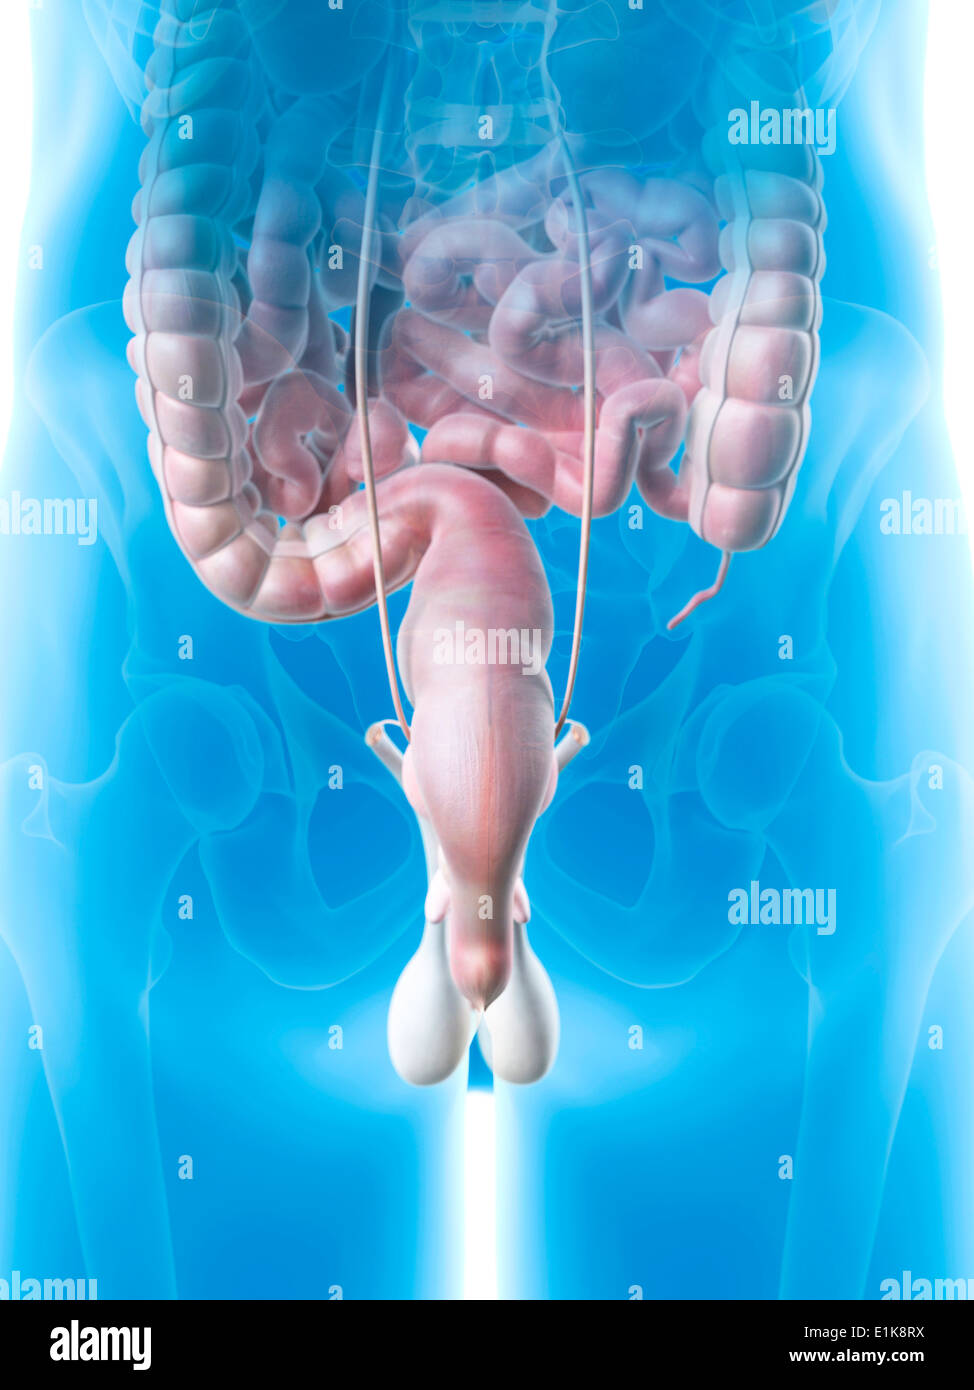 Human rectum computer artwork. Stock Photo